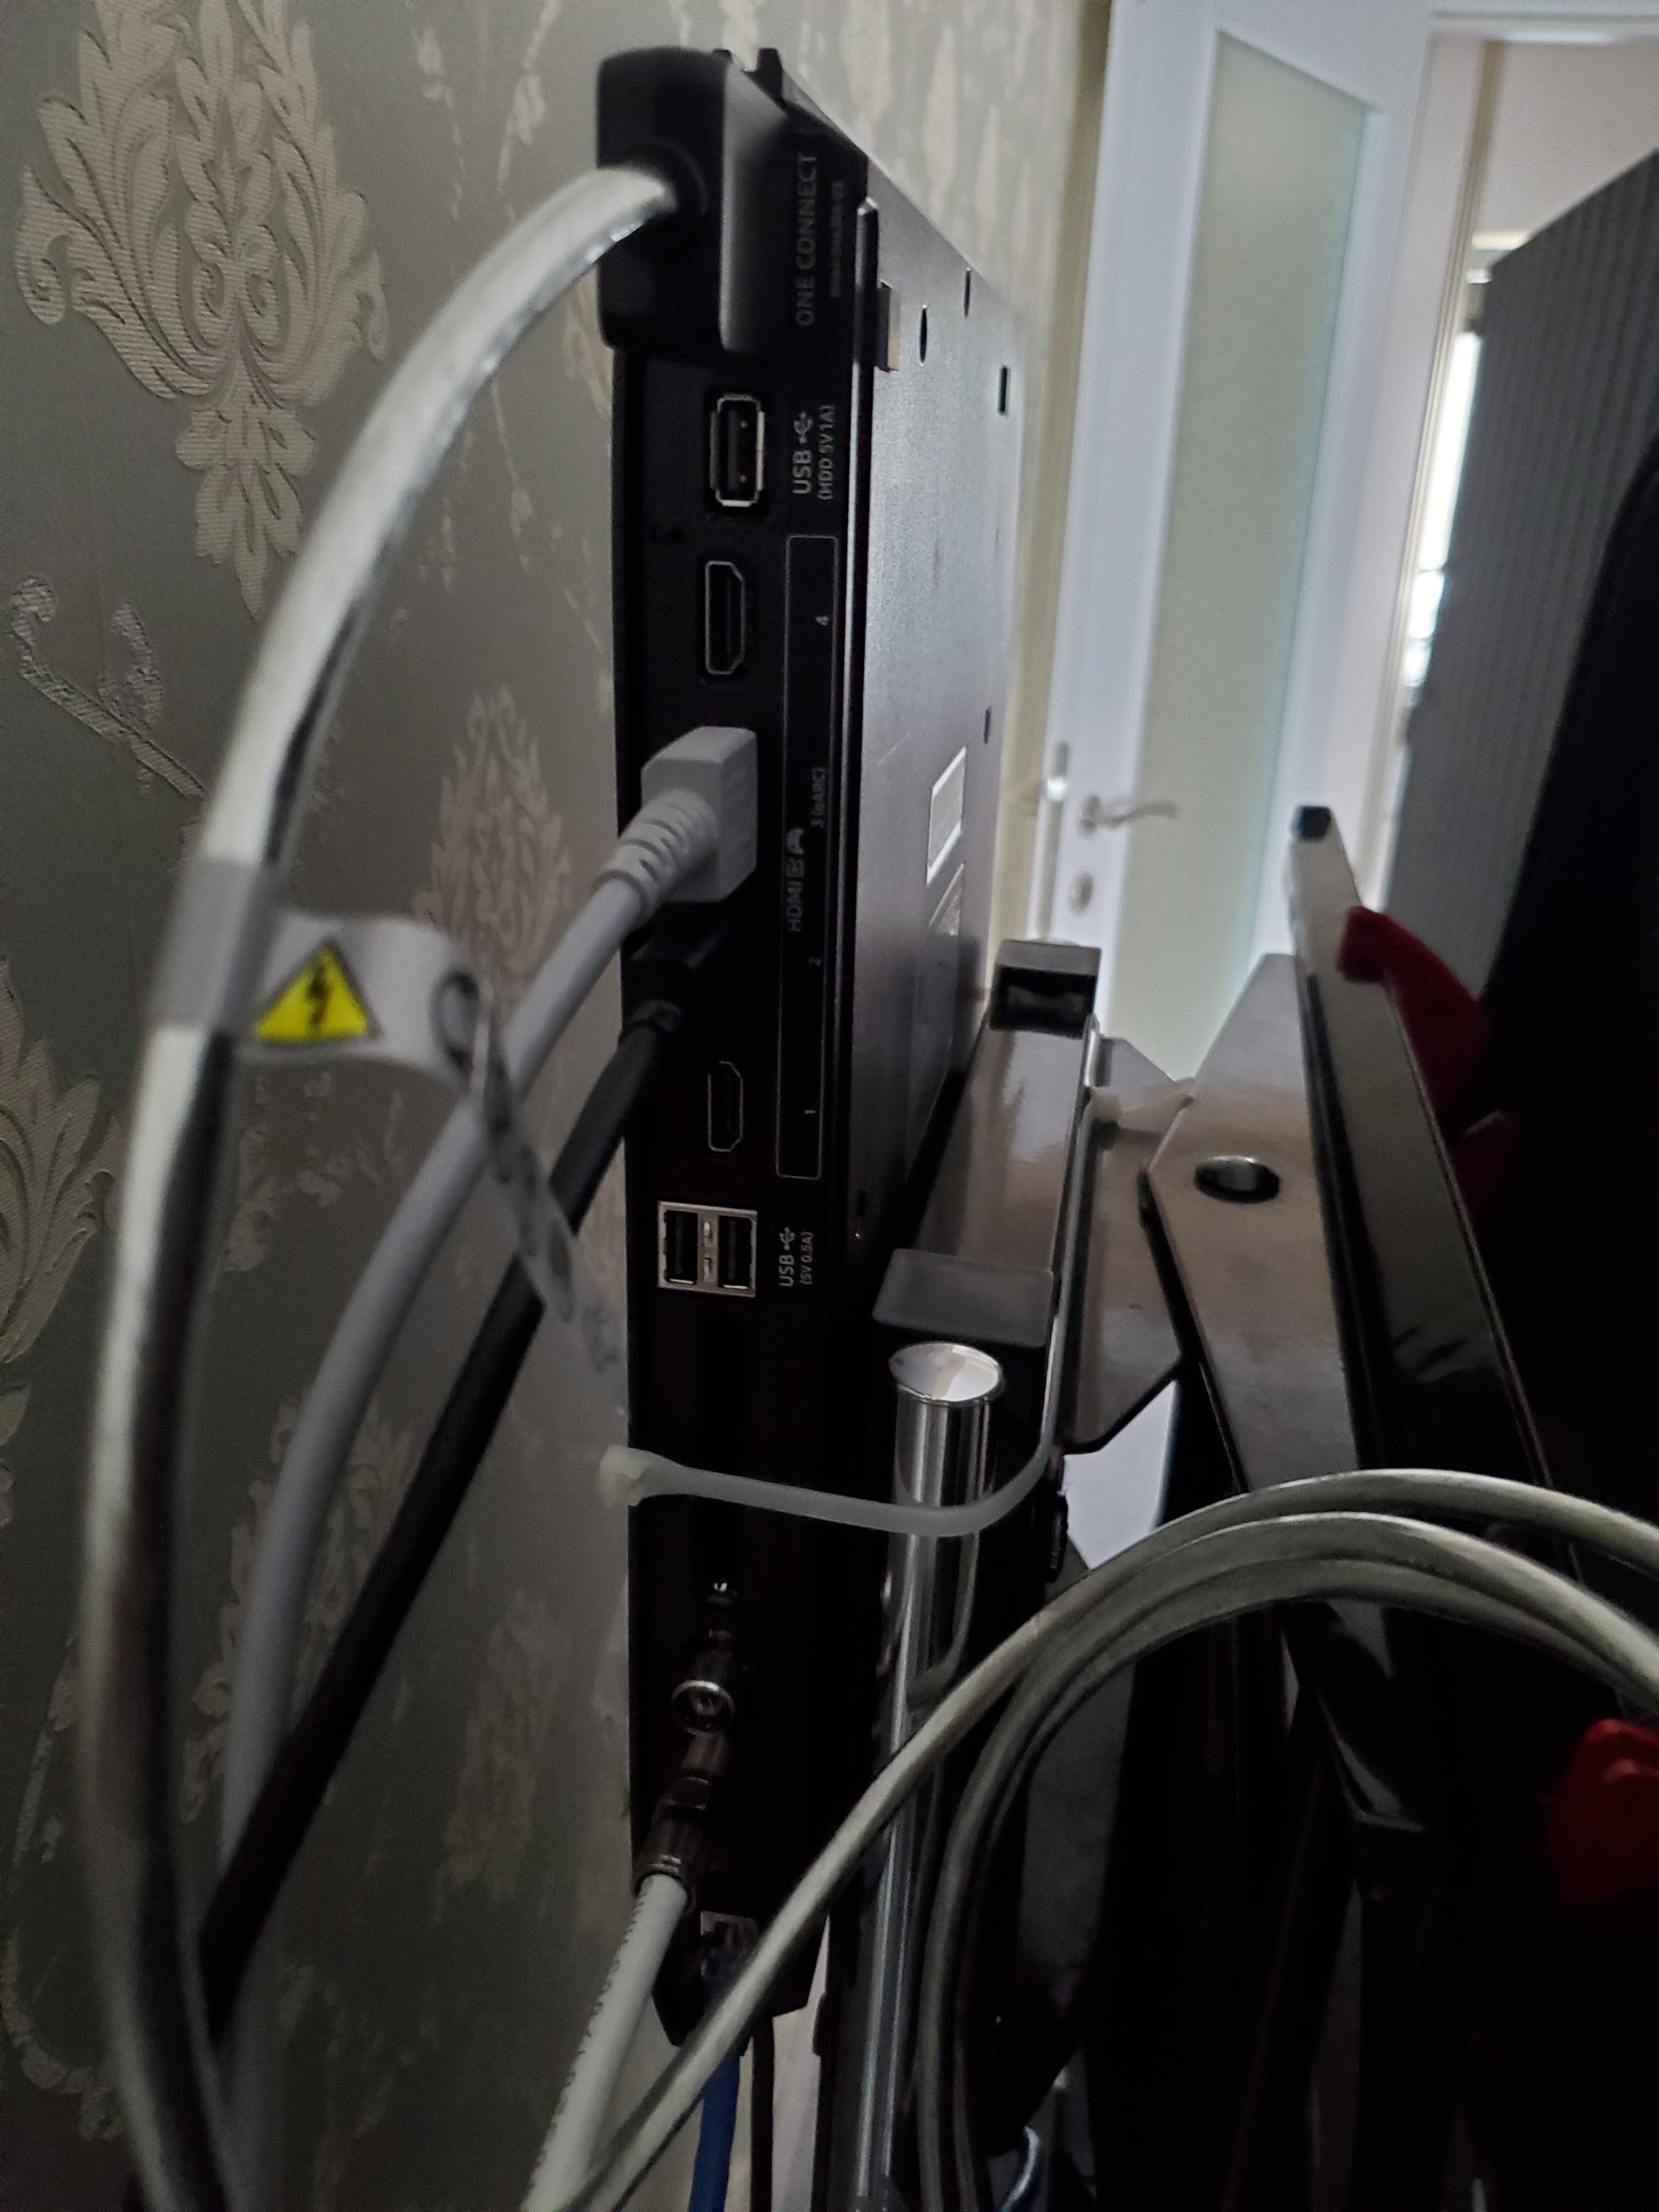 QN95B wall mount - One connect Box - where do I mo... - Samsung Members